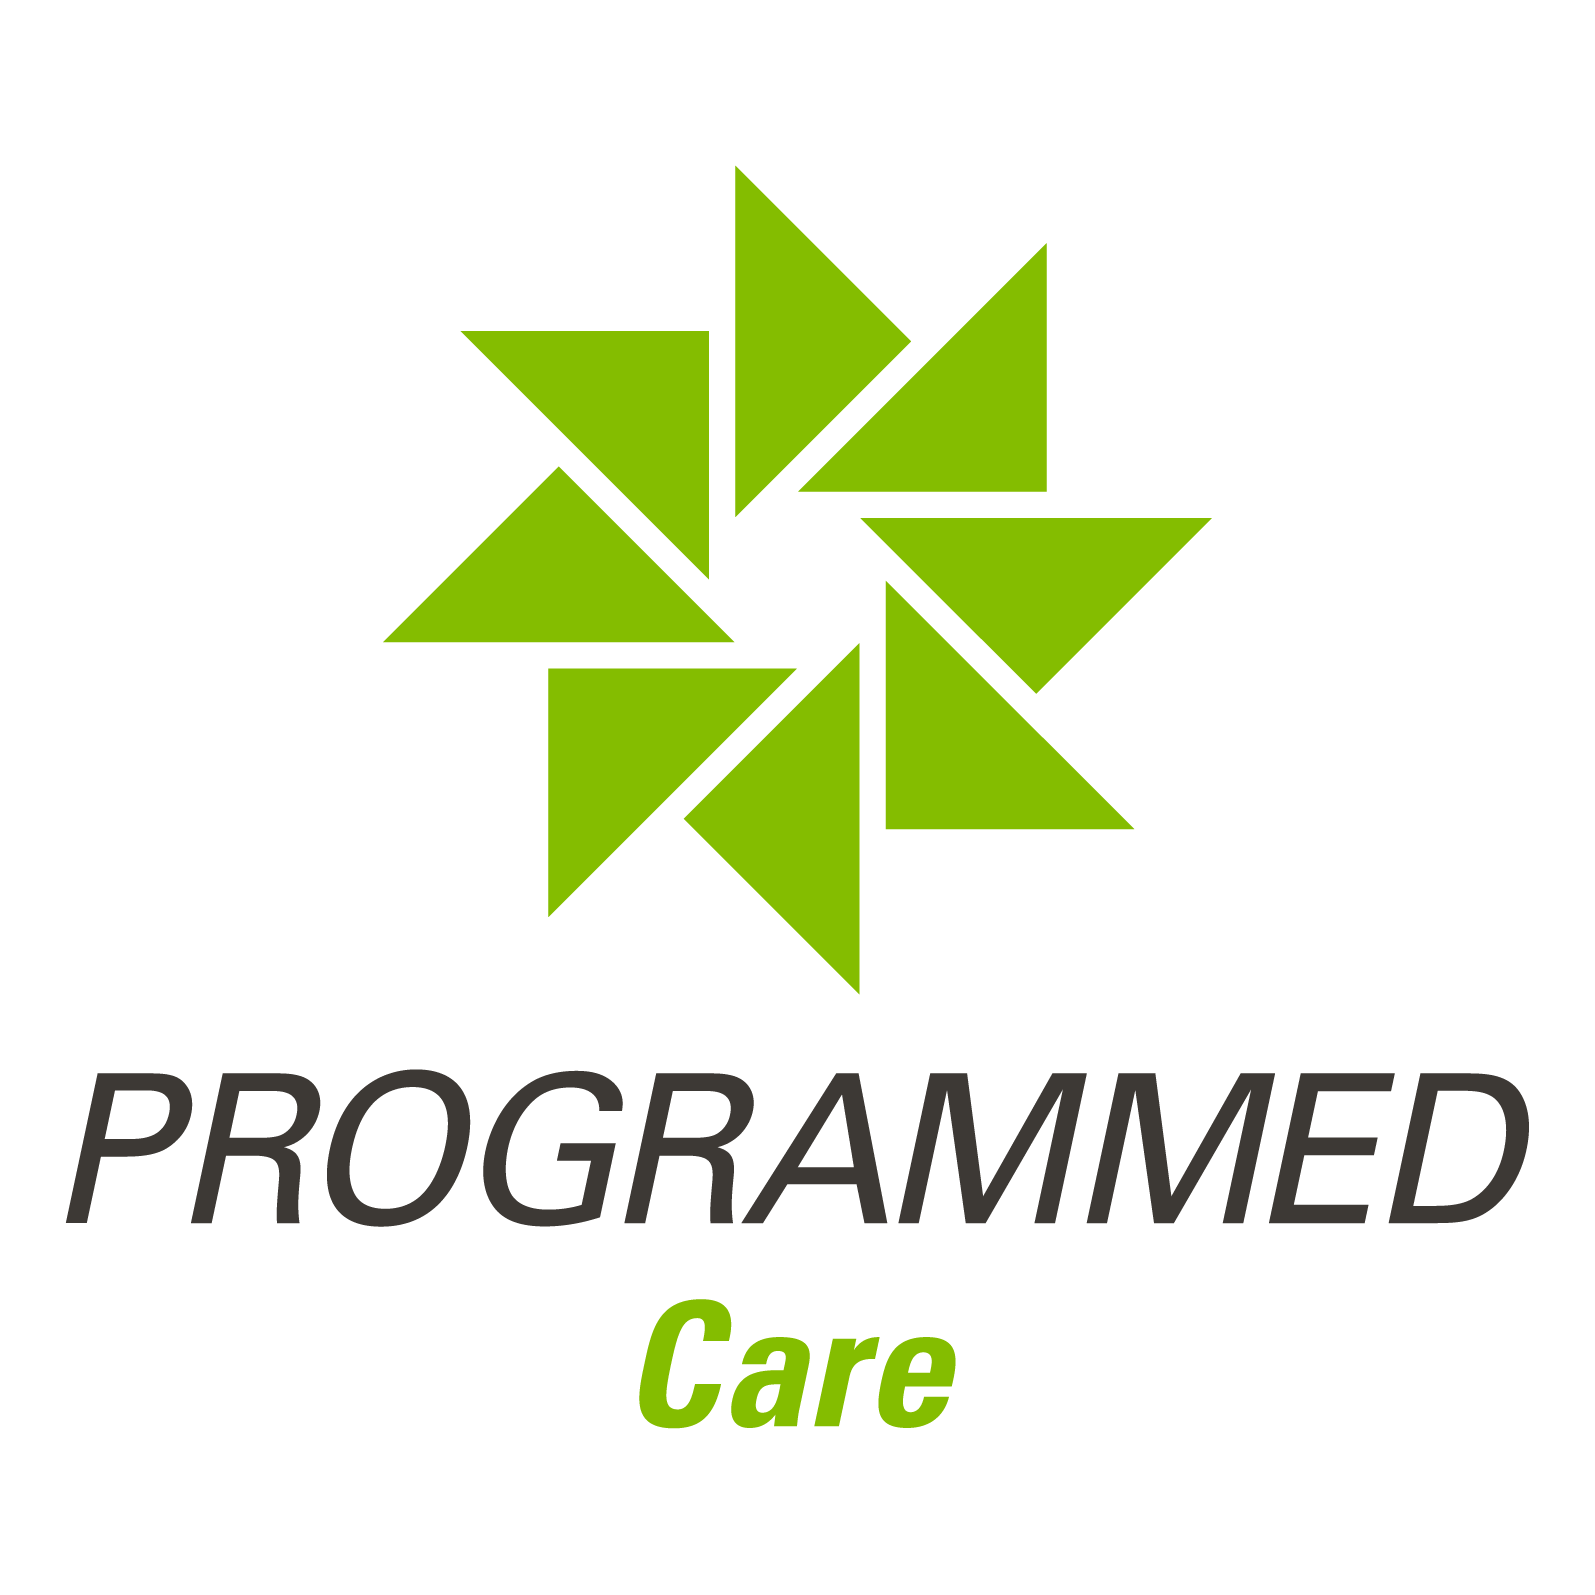 Programmed Care Brisbane City 13 10 95